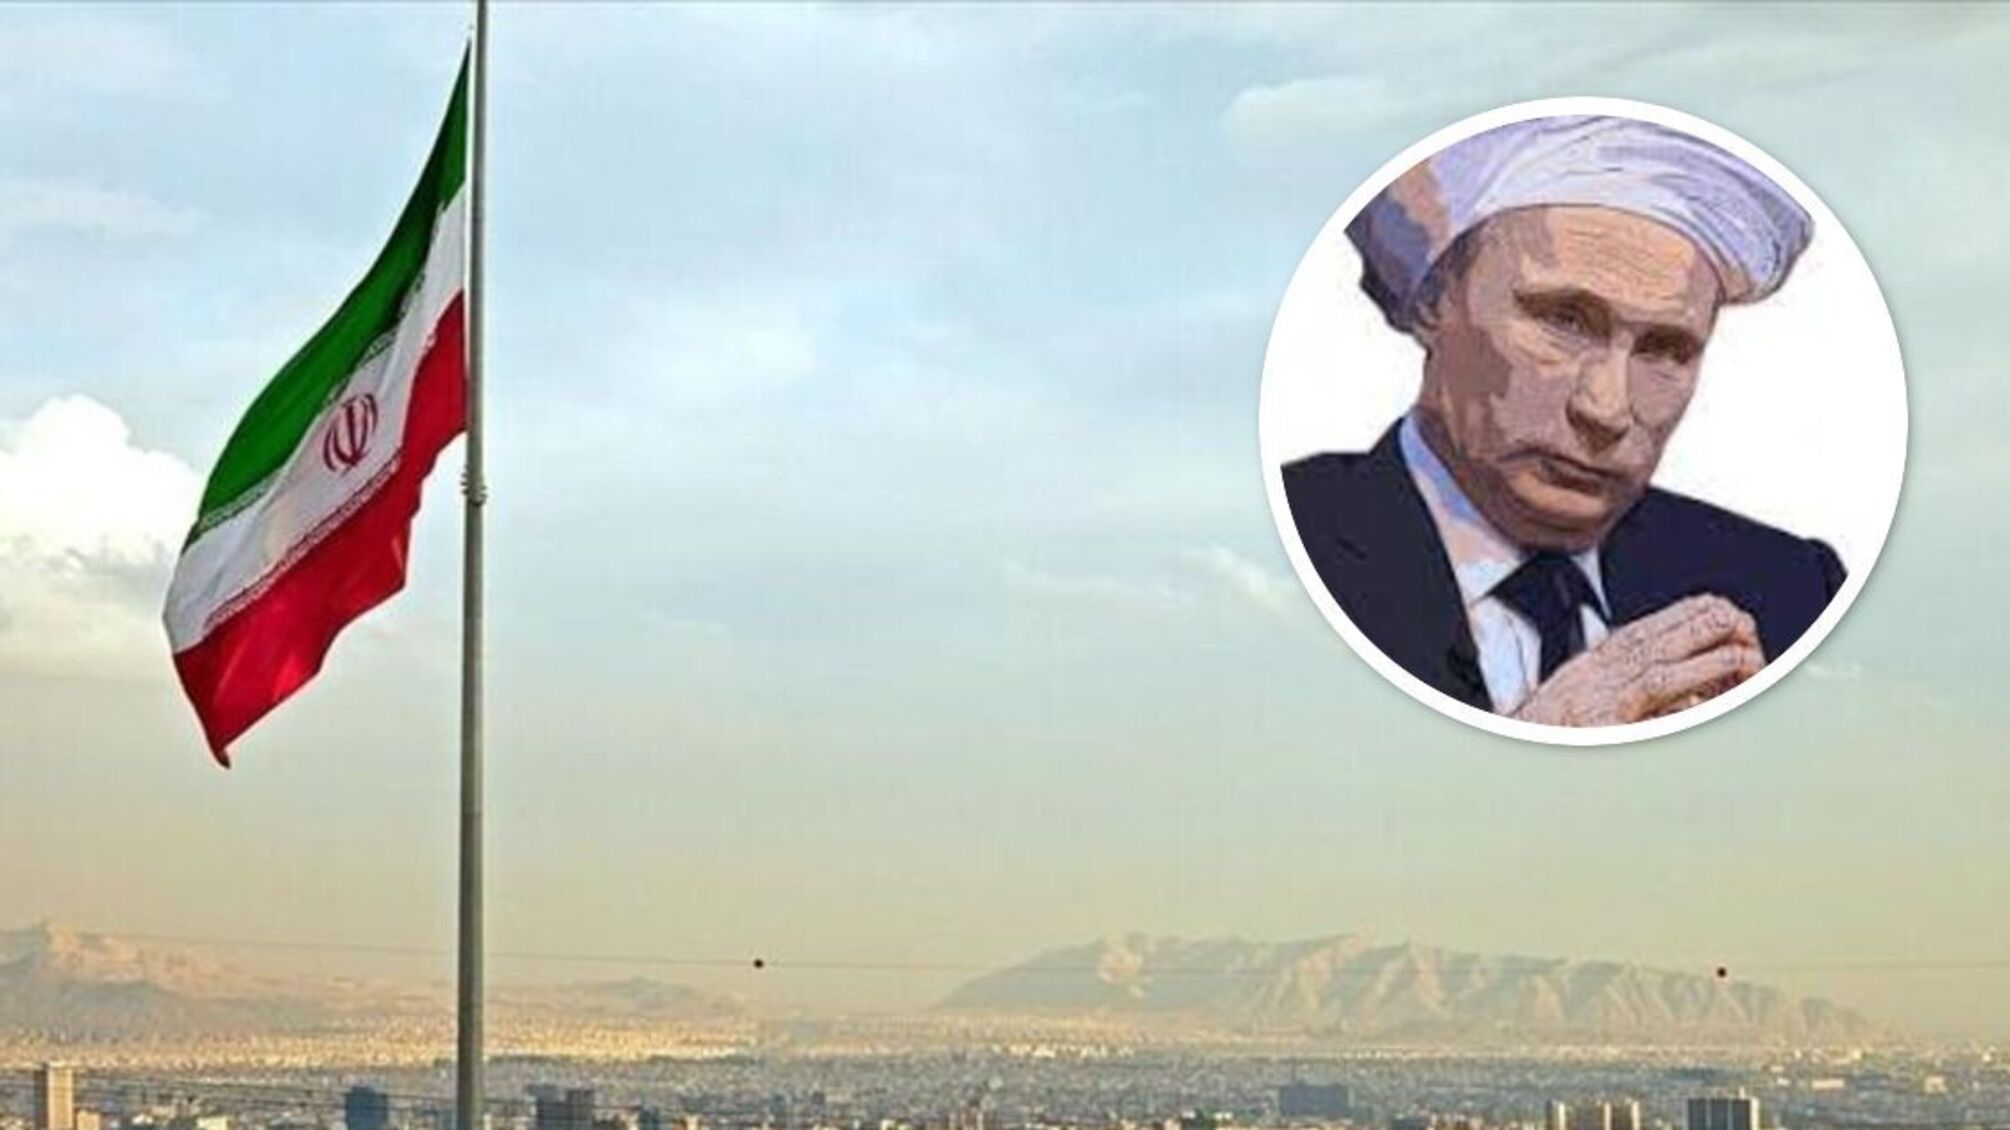 Байден – в Израиль, а путин – в Иран: в кремле озвучили маршрут диктатора